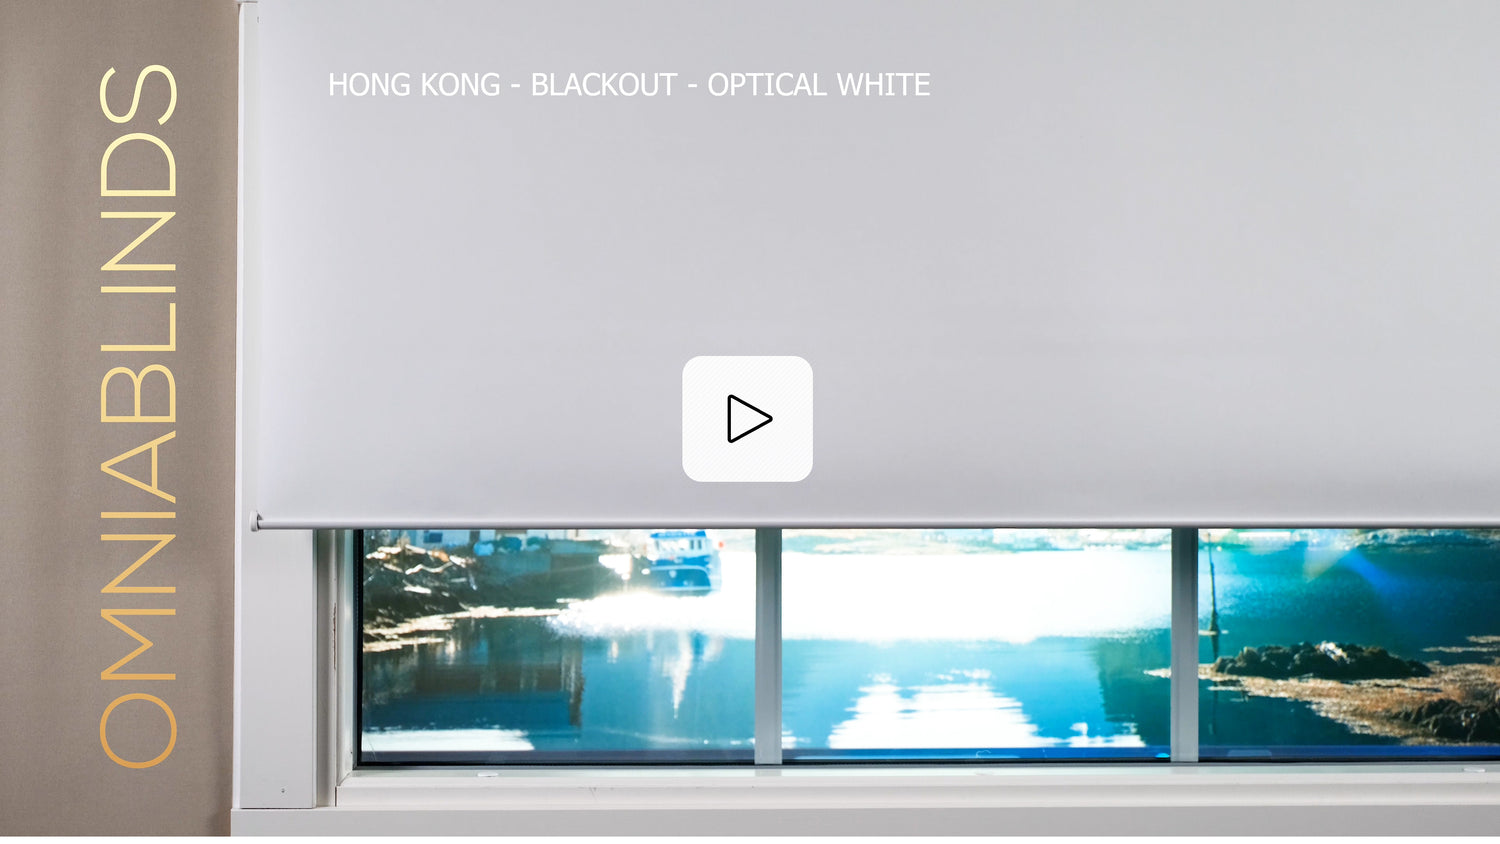 Hong Kong - Blackout - Optical White